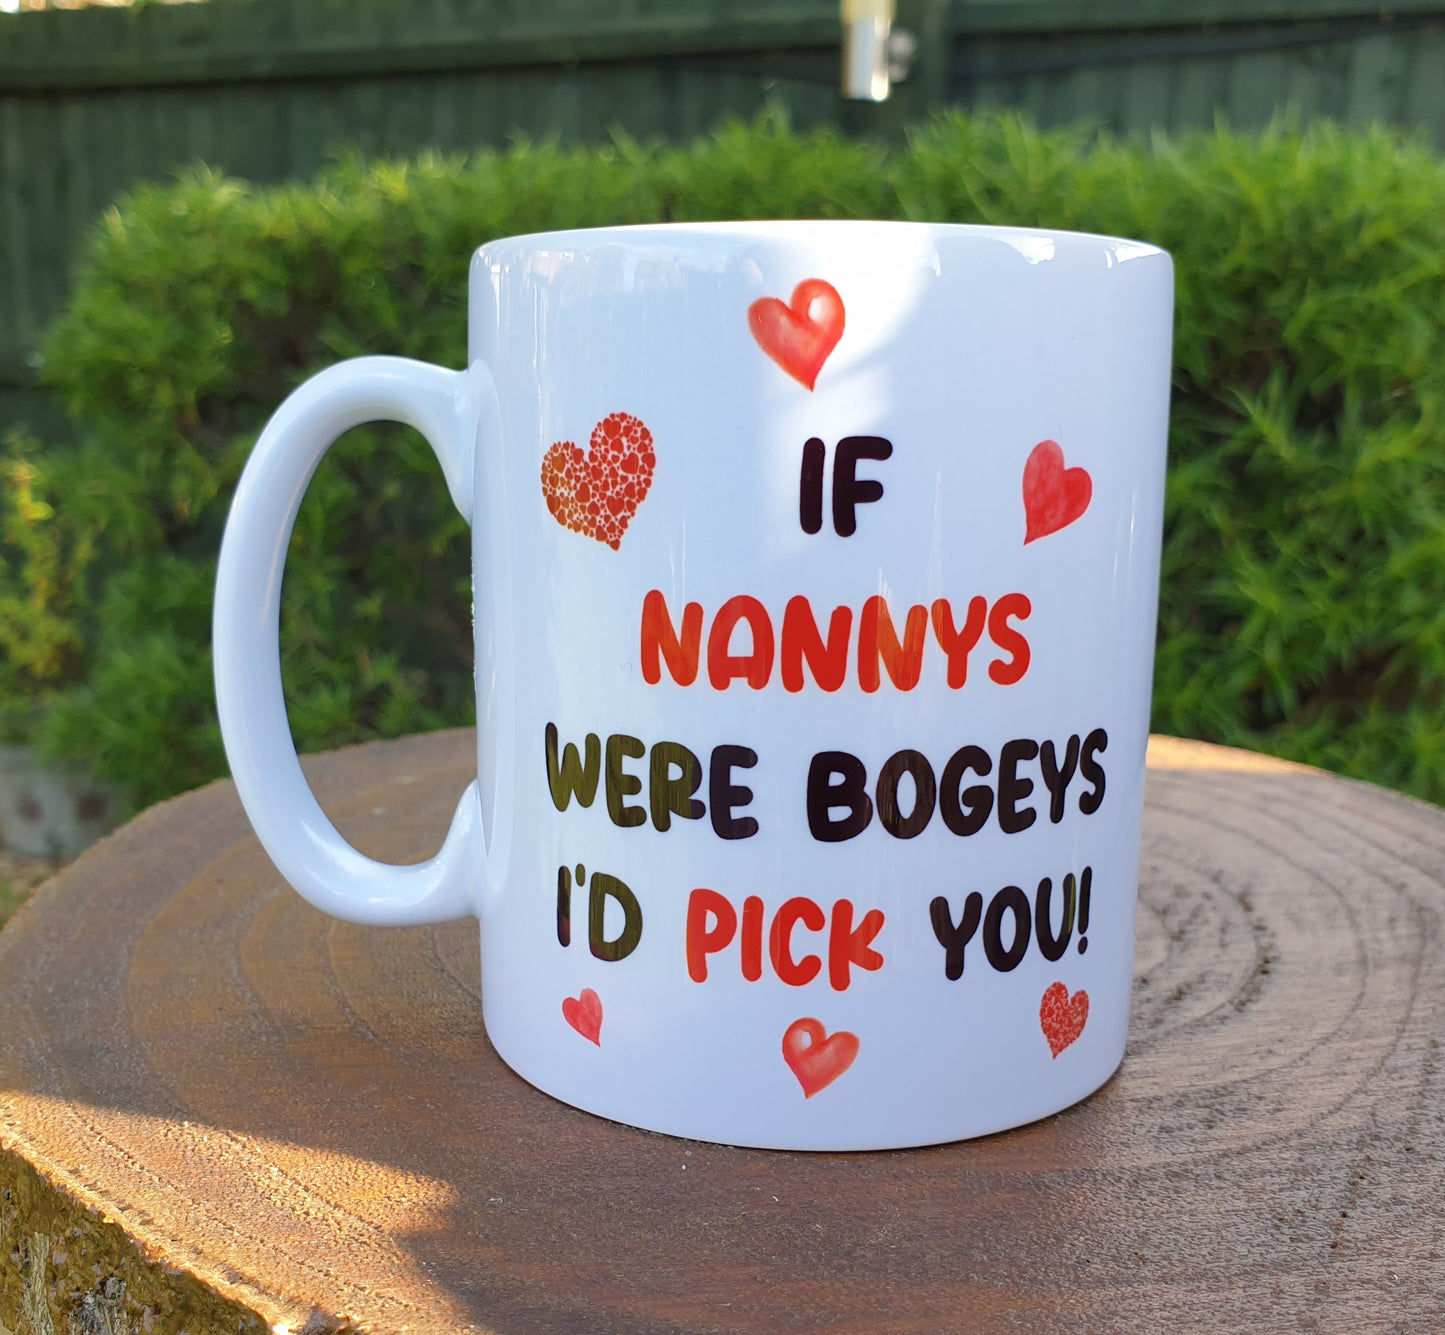 Nanny Mug Gift - If Nannys Were Bogeys I'd We'd Pick You - Nice Funny Cheeky Novelty Cup Present